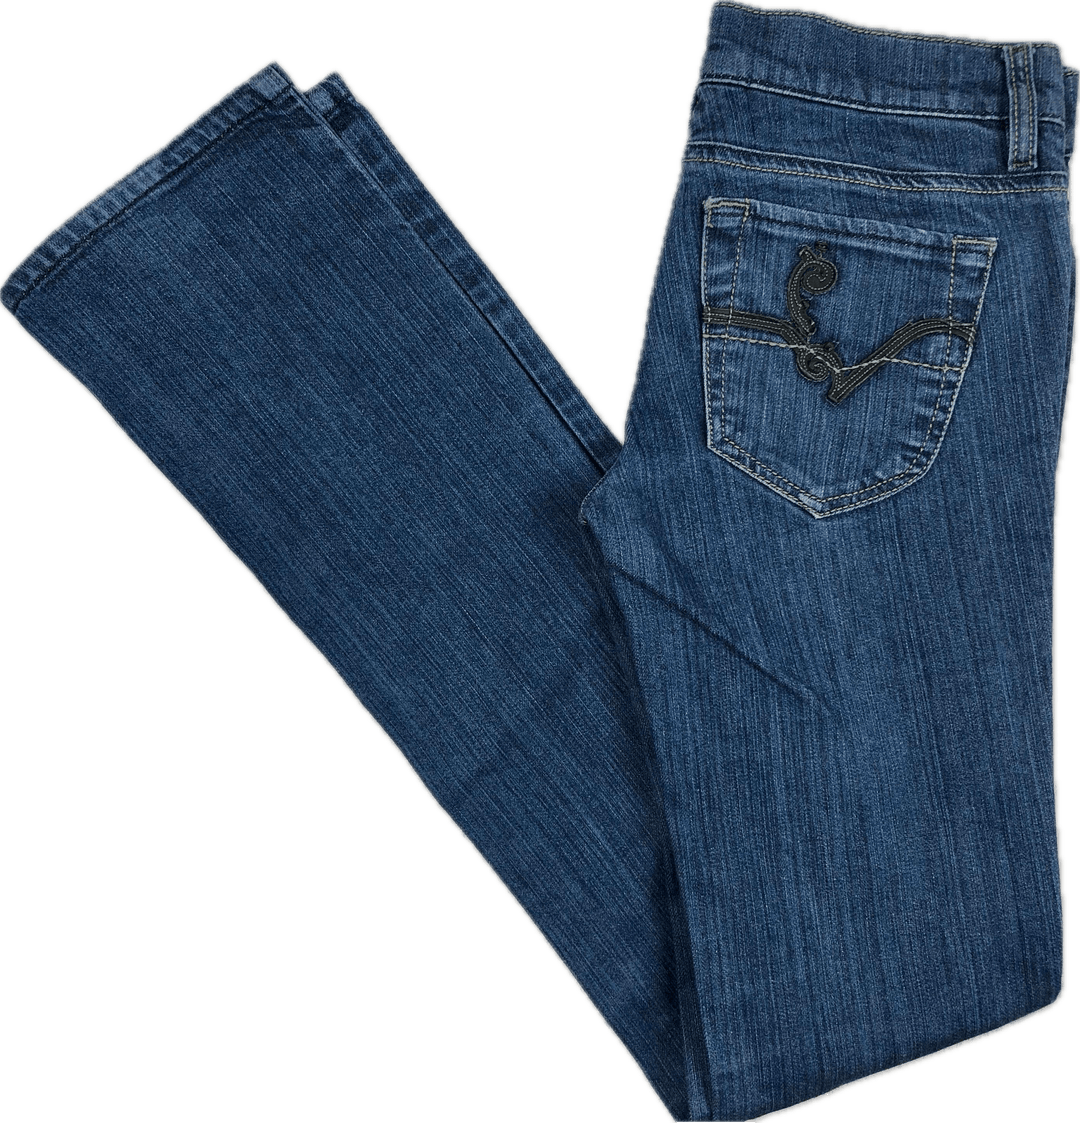 Diesel 'Liv' Slim Straight Embroidered Pocket Denim Jeans Size - 25/32 - Jean Pool